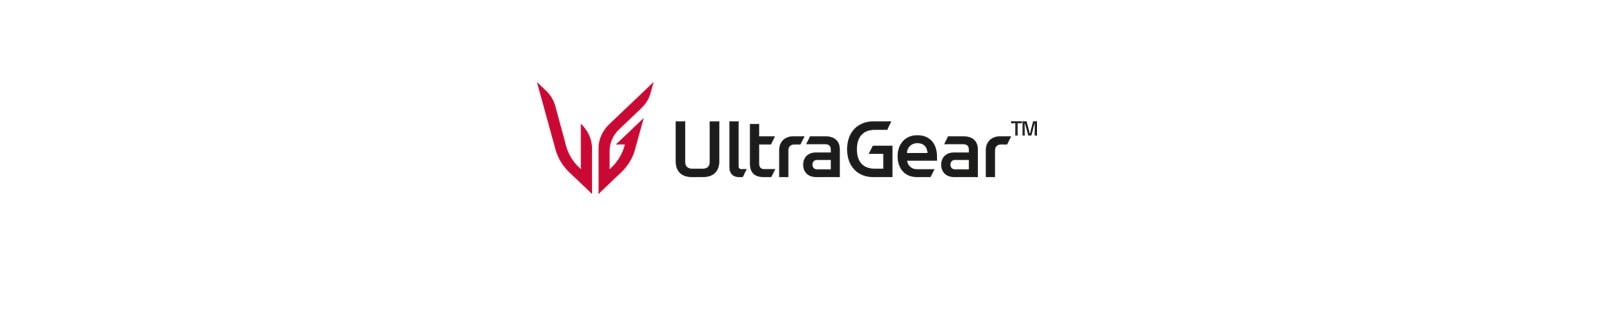 UltraGear™ logotip.